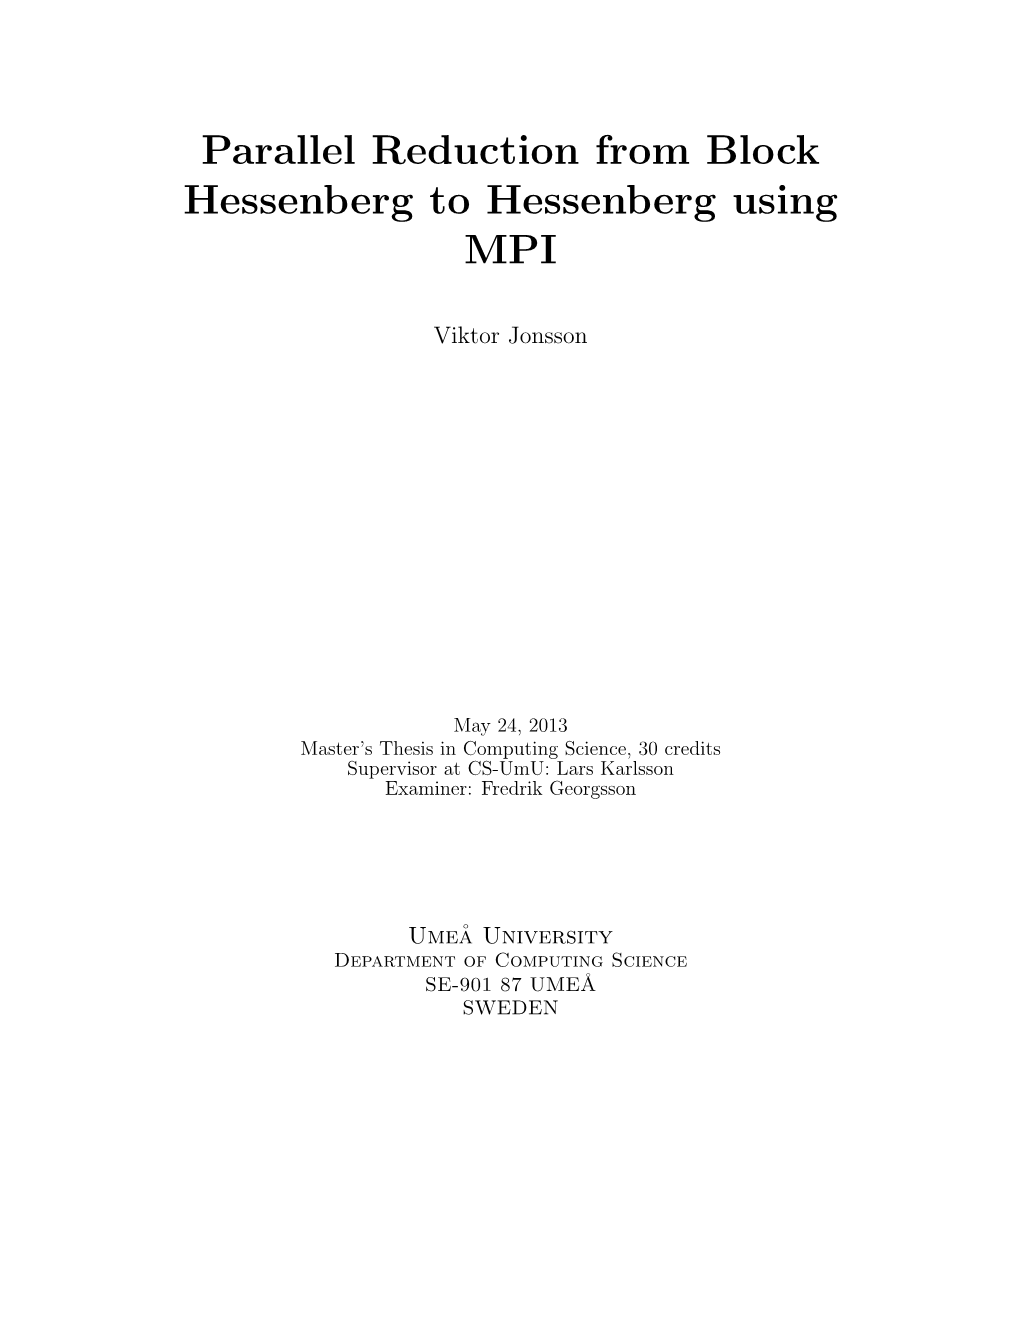 Parallel Reduction from Block Hessenberg to Hessenberg Using MPI